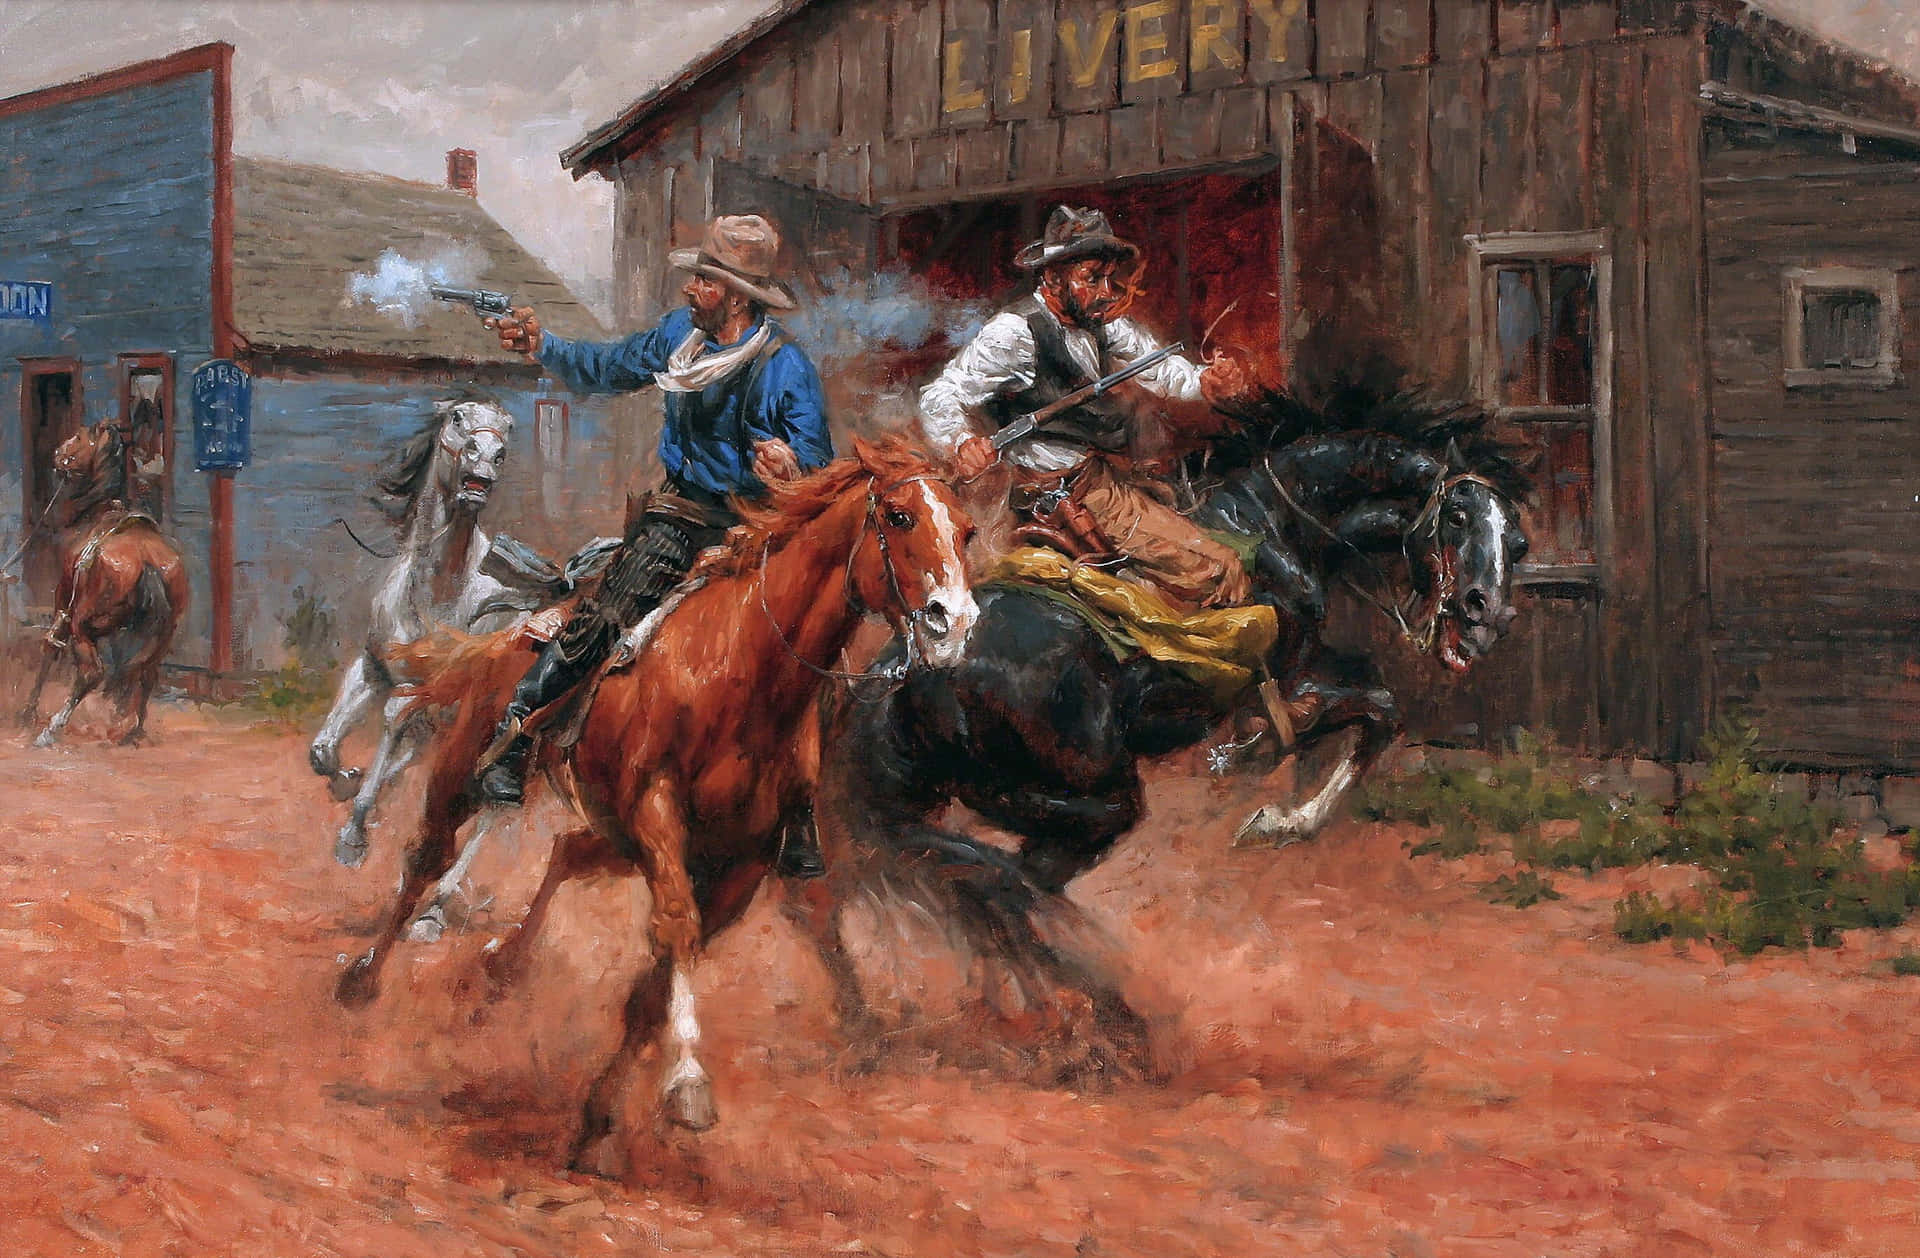 Caption: Two Cowboys Riding Horses through a Beautiful Scenic Landscape